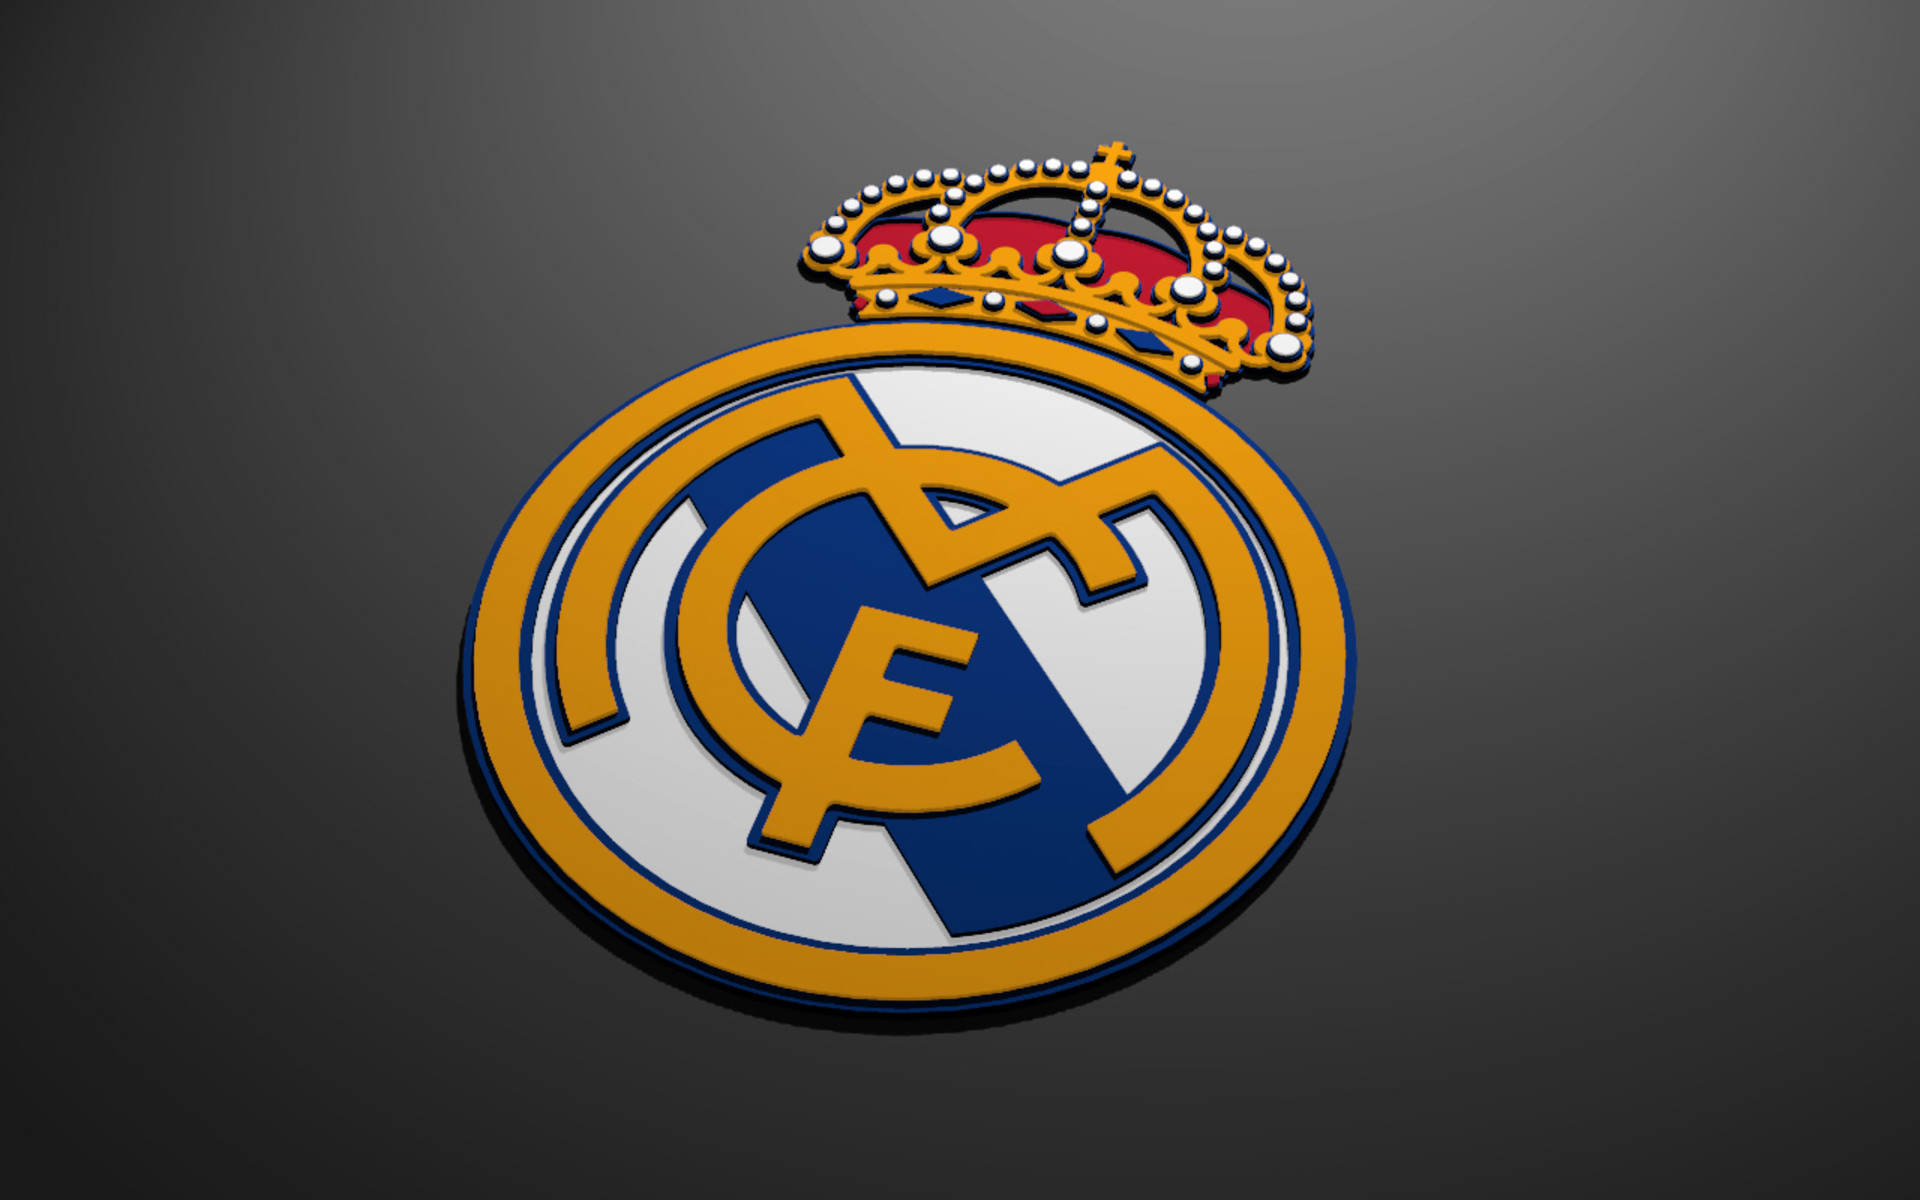 Real Madrid Wallpaper Full HD 2018 (72+ images)